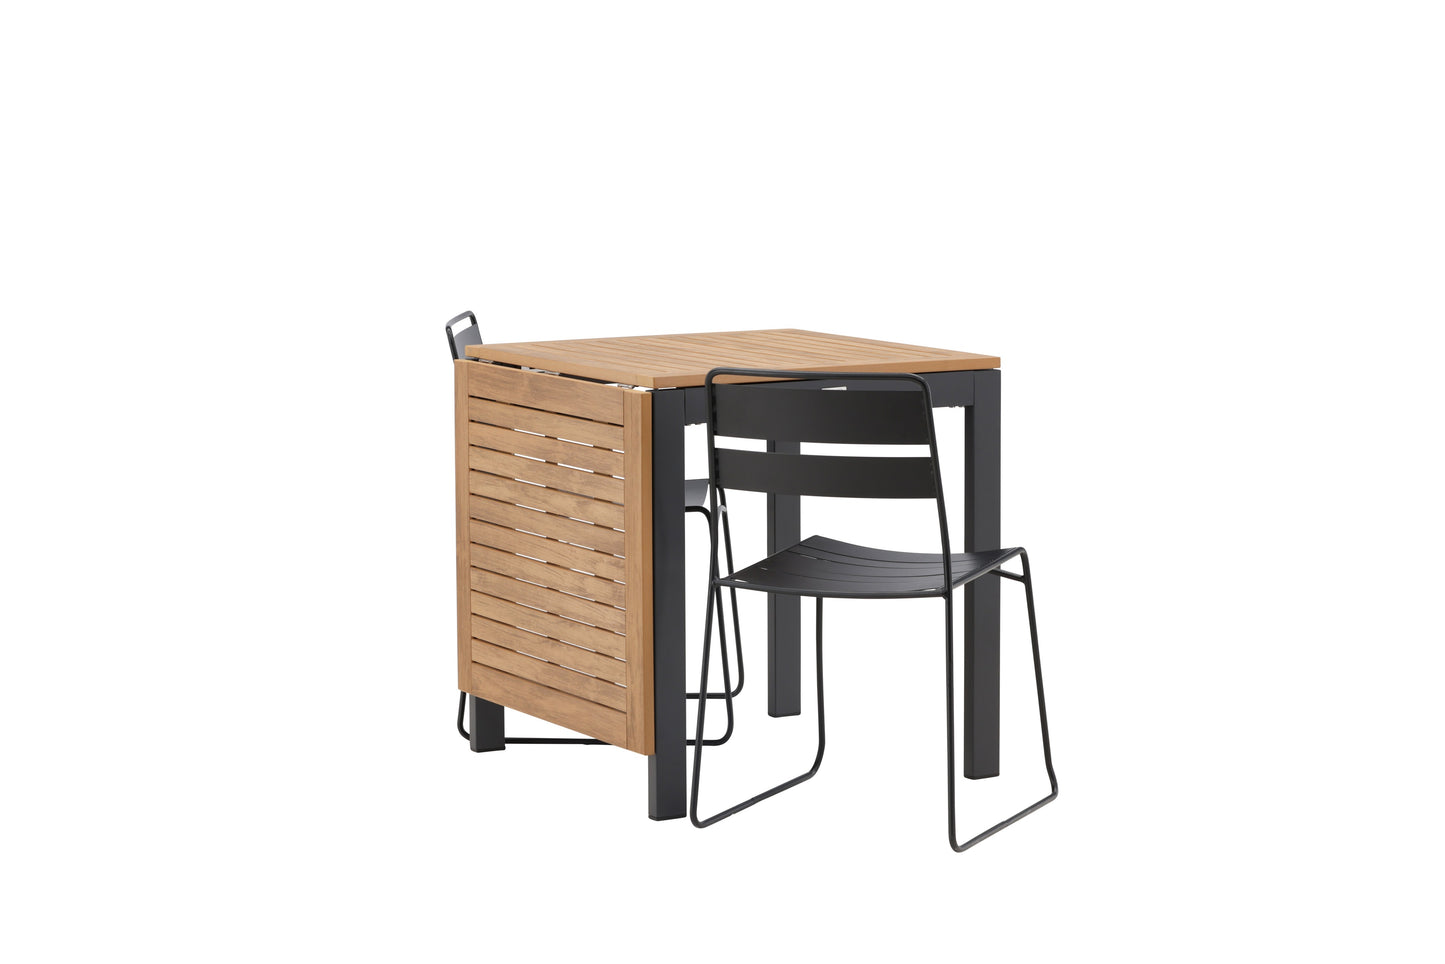 Diego - Cafébord, Aluminium - Sort / Brun Nonwood - Rektangulær 70*70/130* + Lia Spisebordsstol - Sort